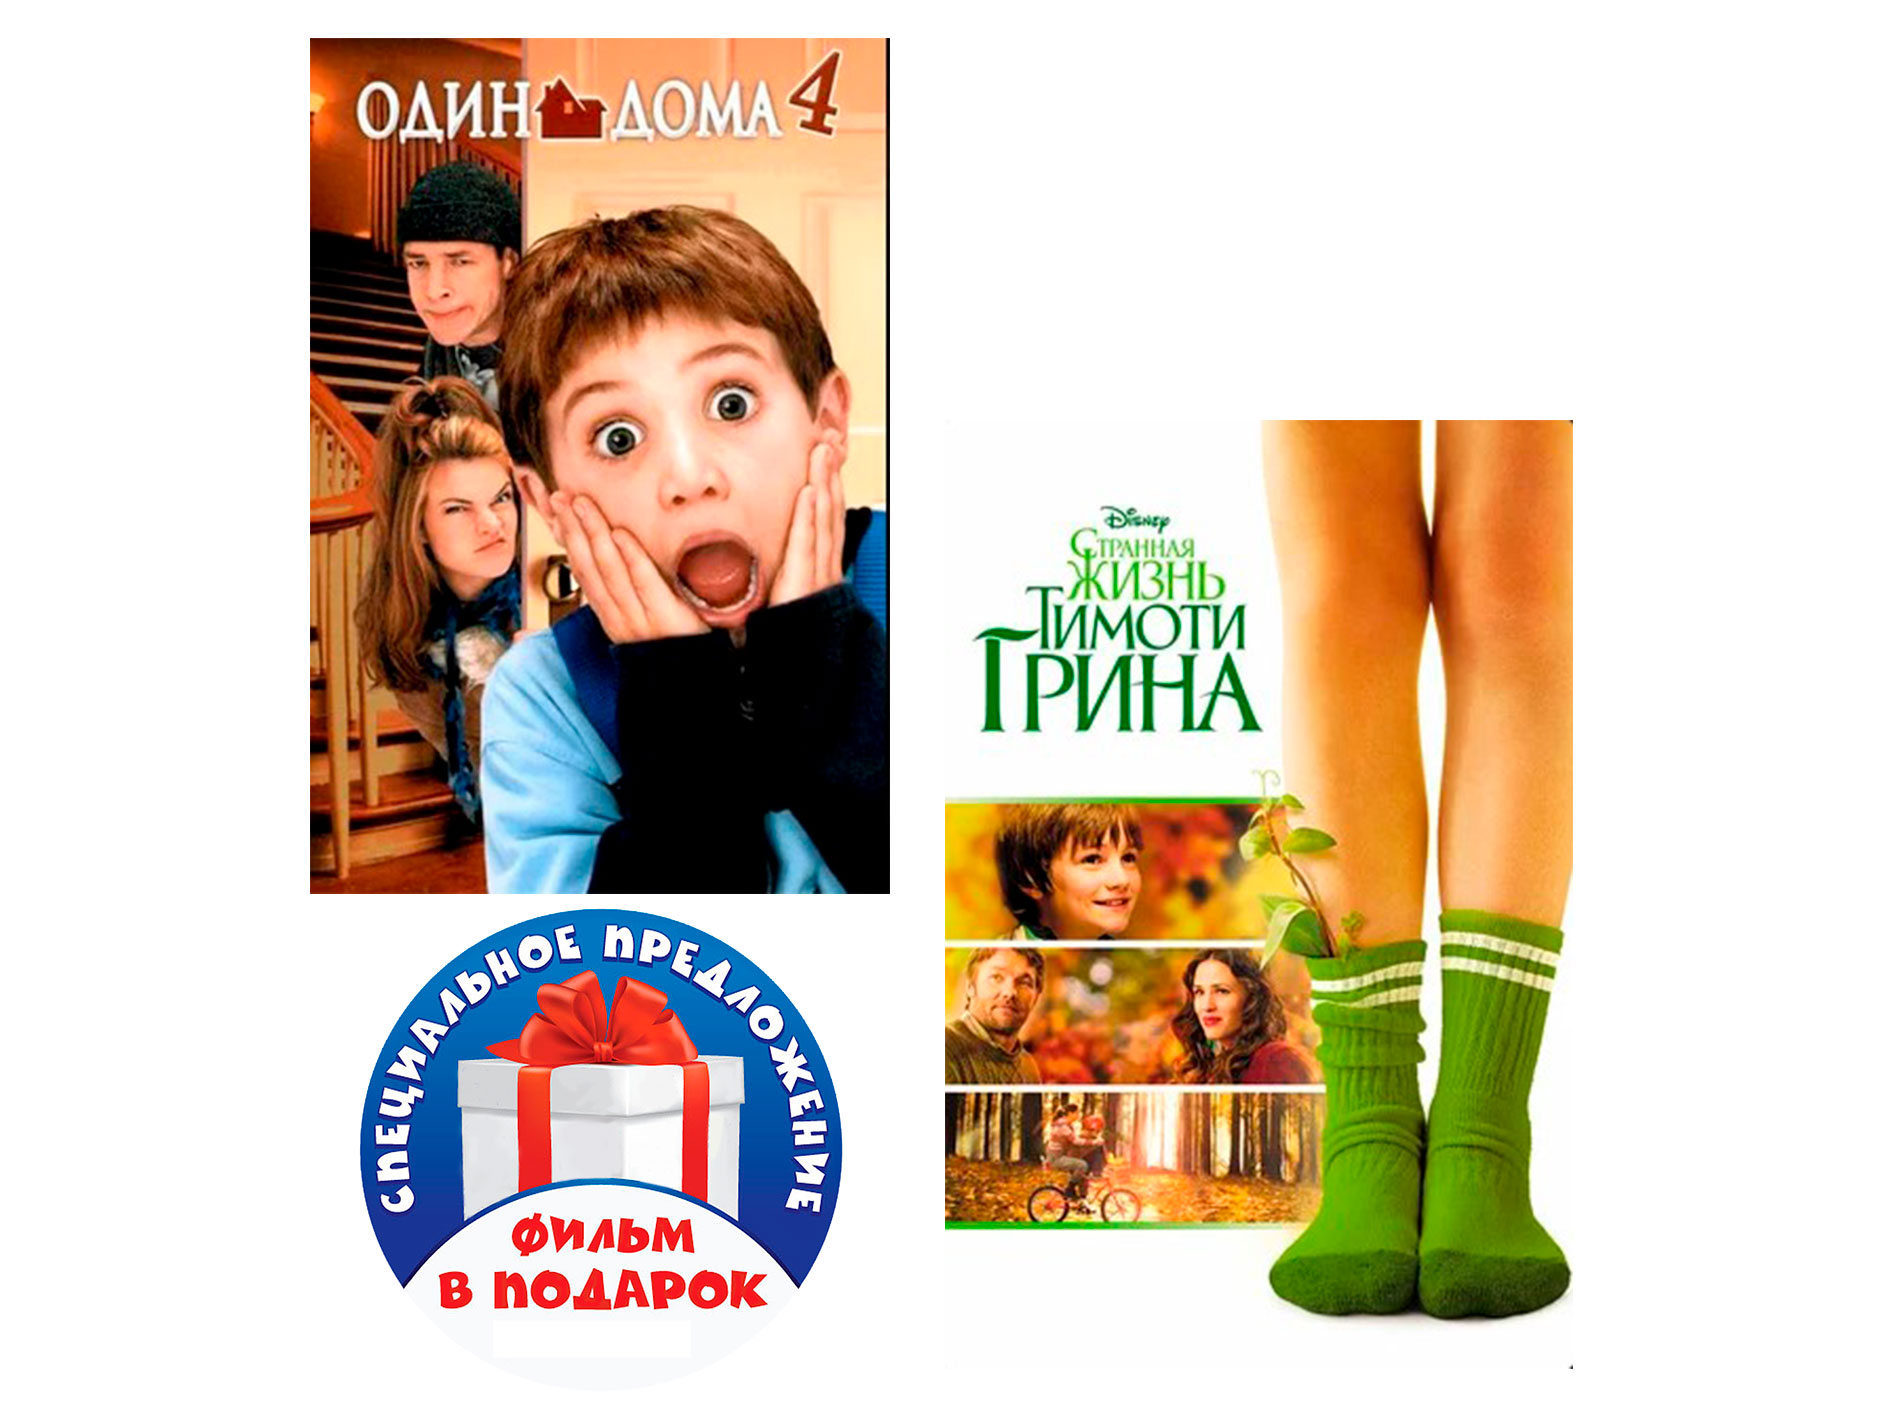 Один дома 4 / Странная жизнь Тимоти Грина (2 DVD)